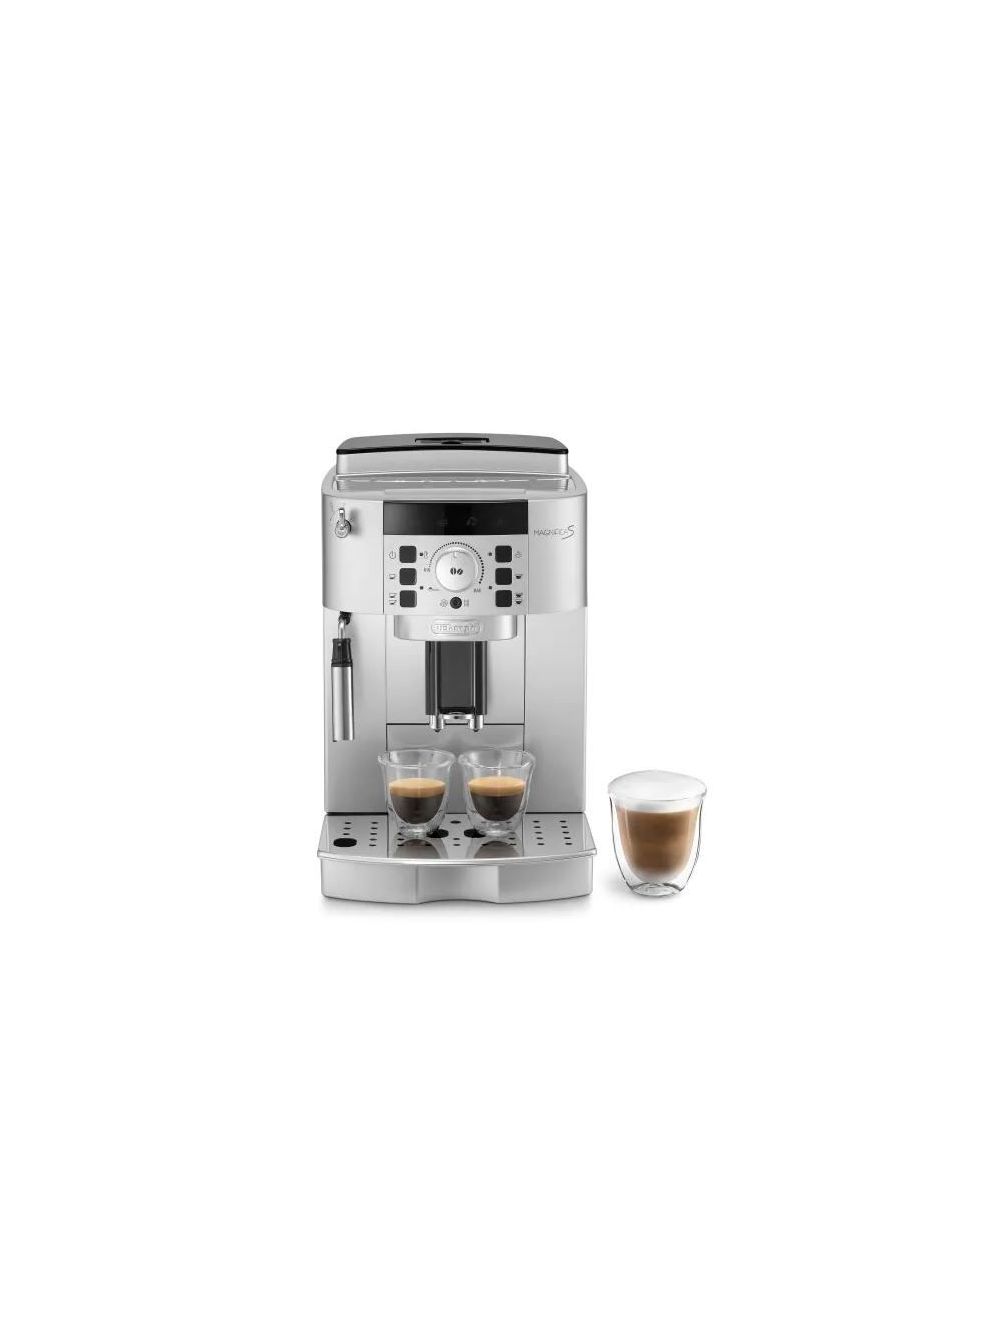 De'Longhi Magnifica S Automatic Coffee Machine
-ECAM22.110SB